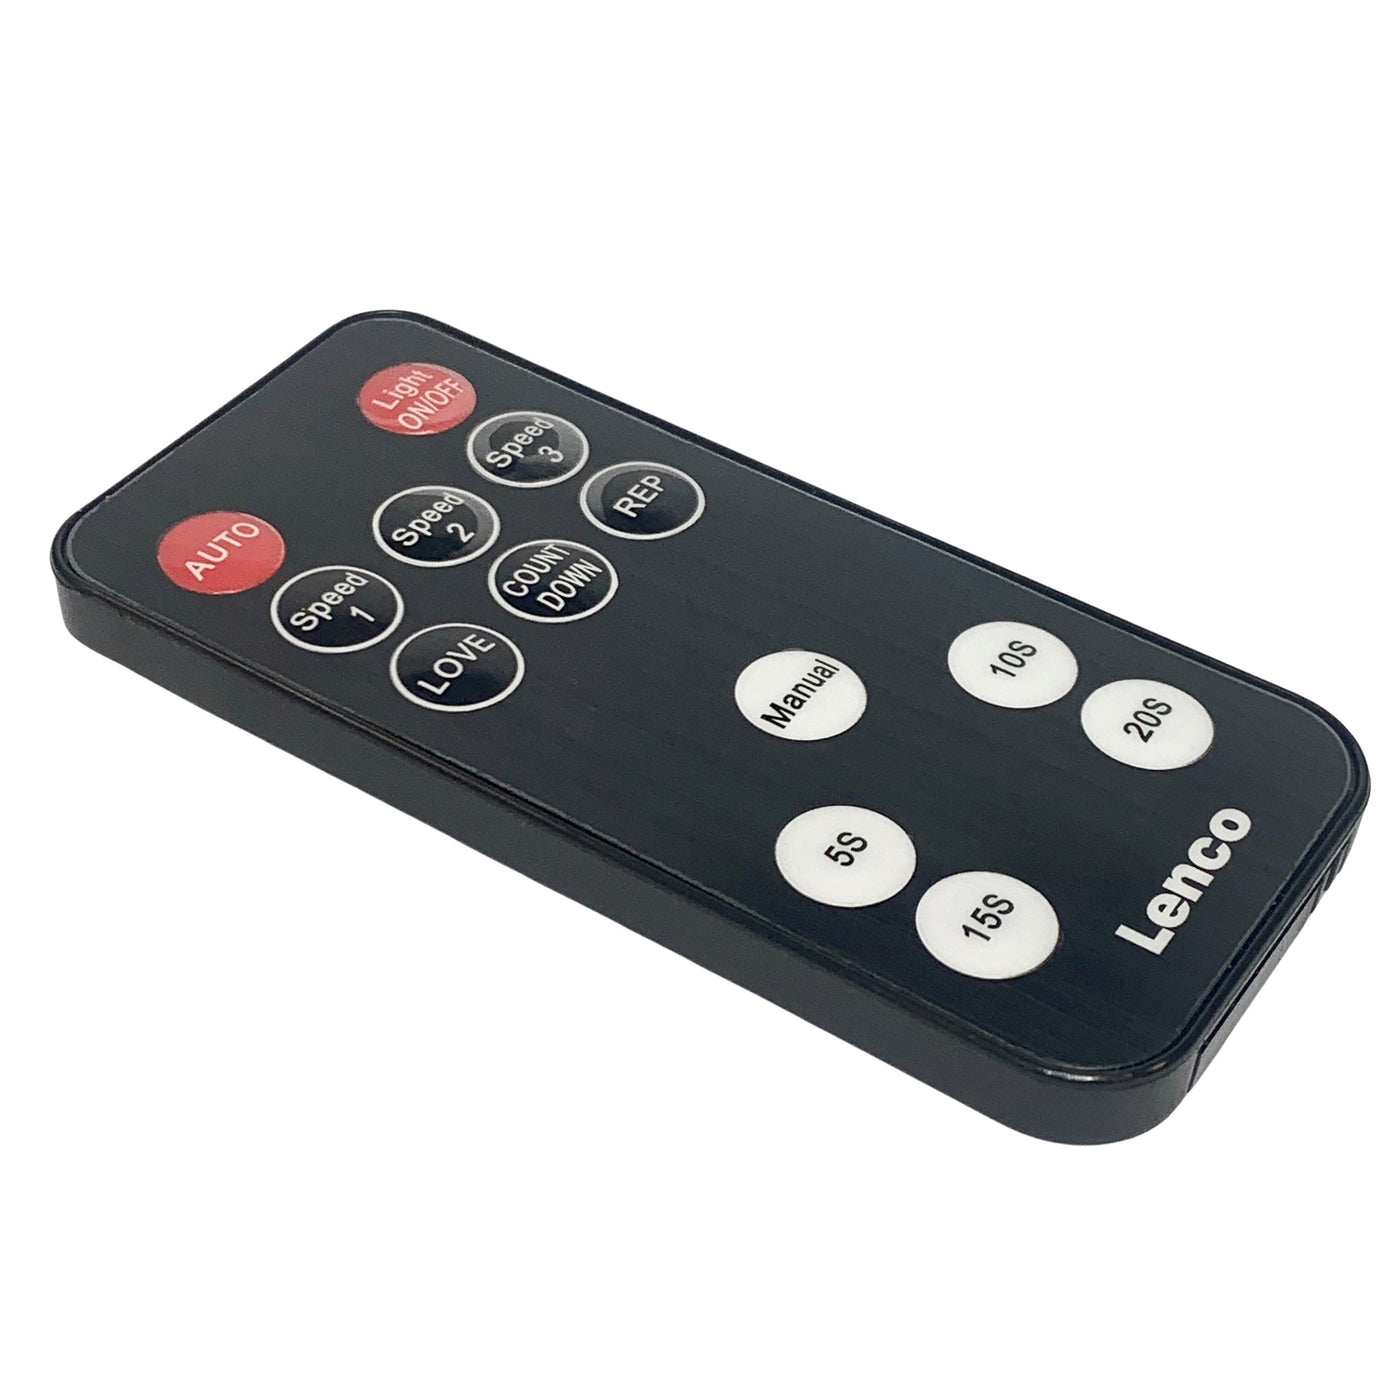 P002766 - Remote control LFM-220